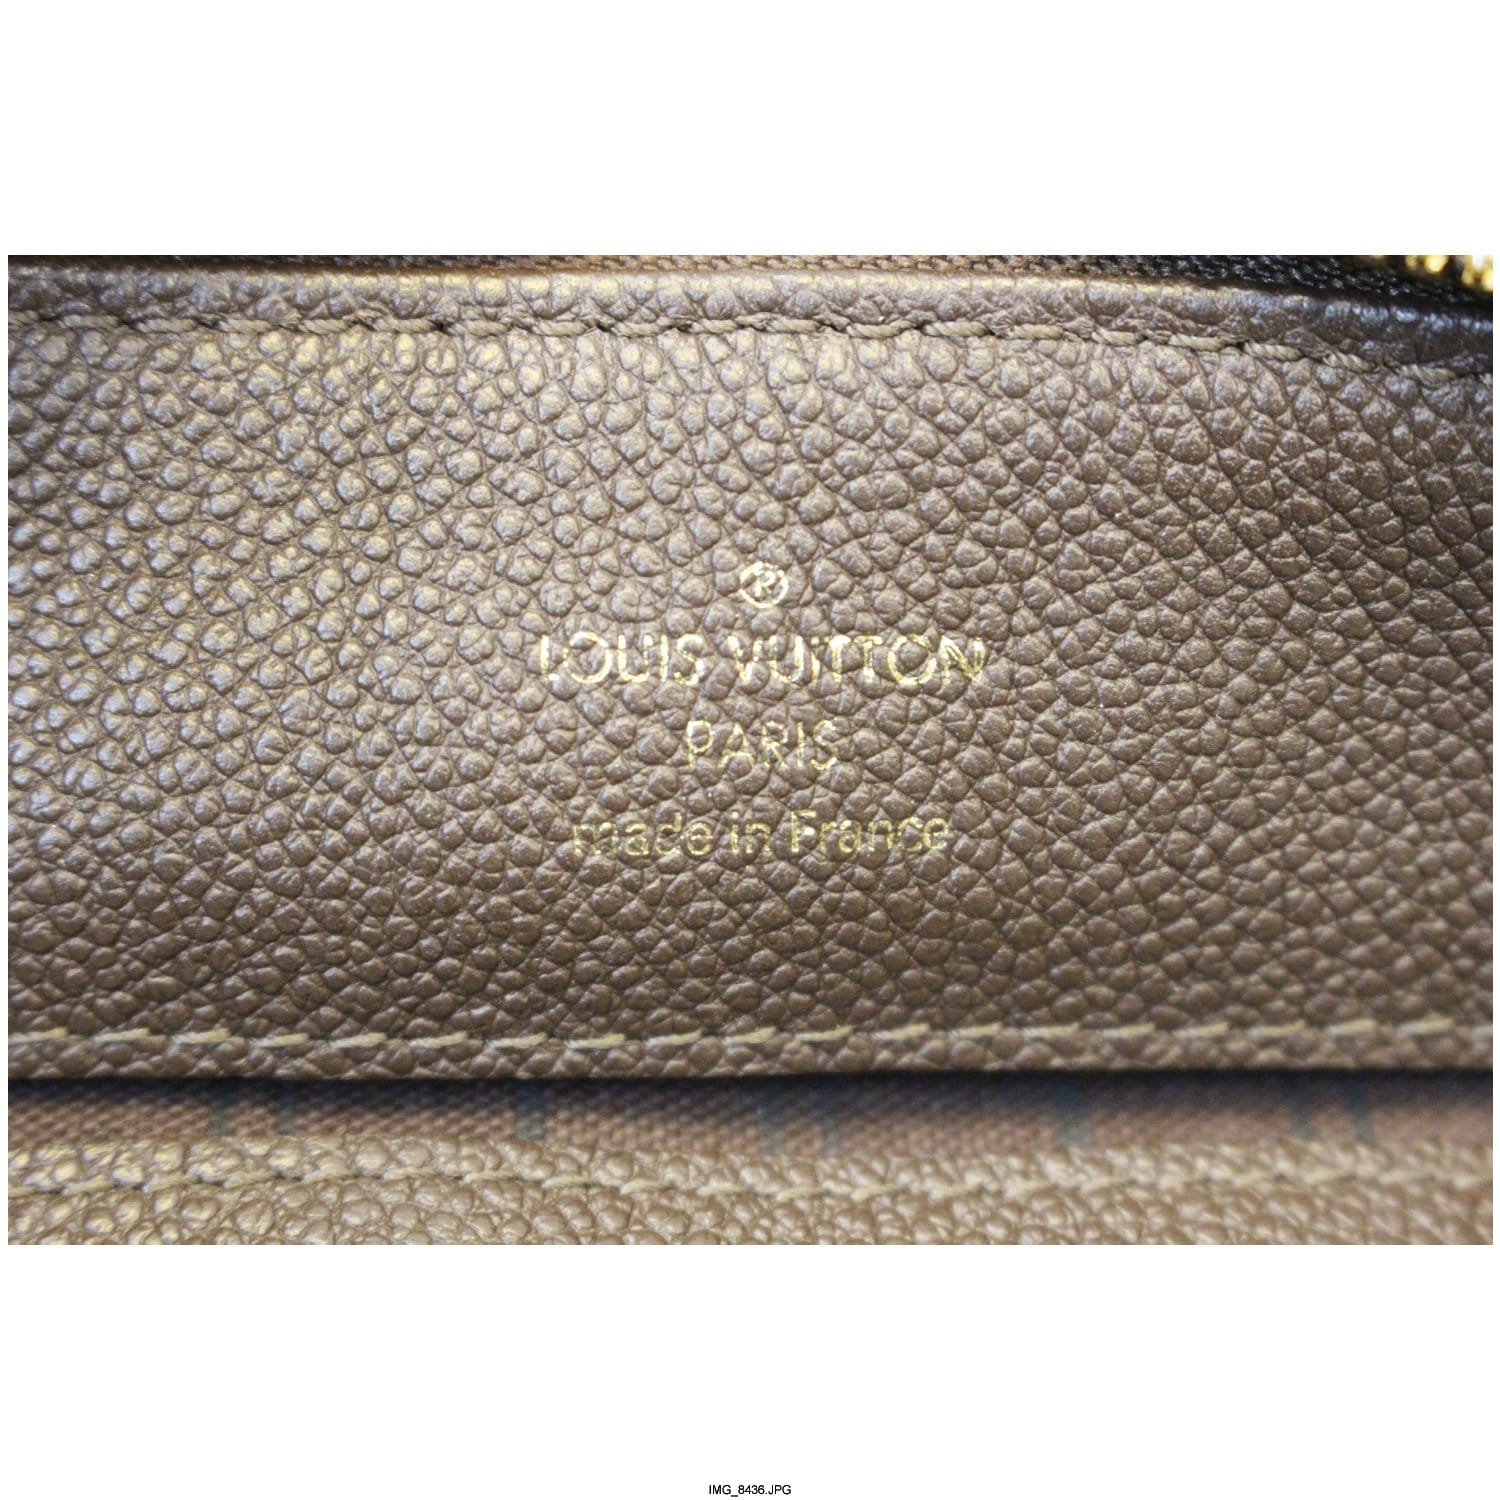 Authentic Louis Vuitton Monogram Empreinte Audacieuse PM Hobo bag